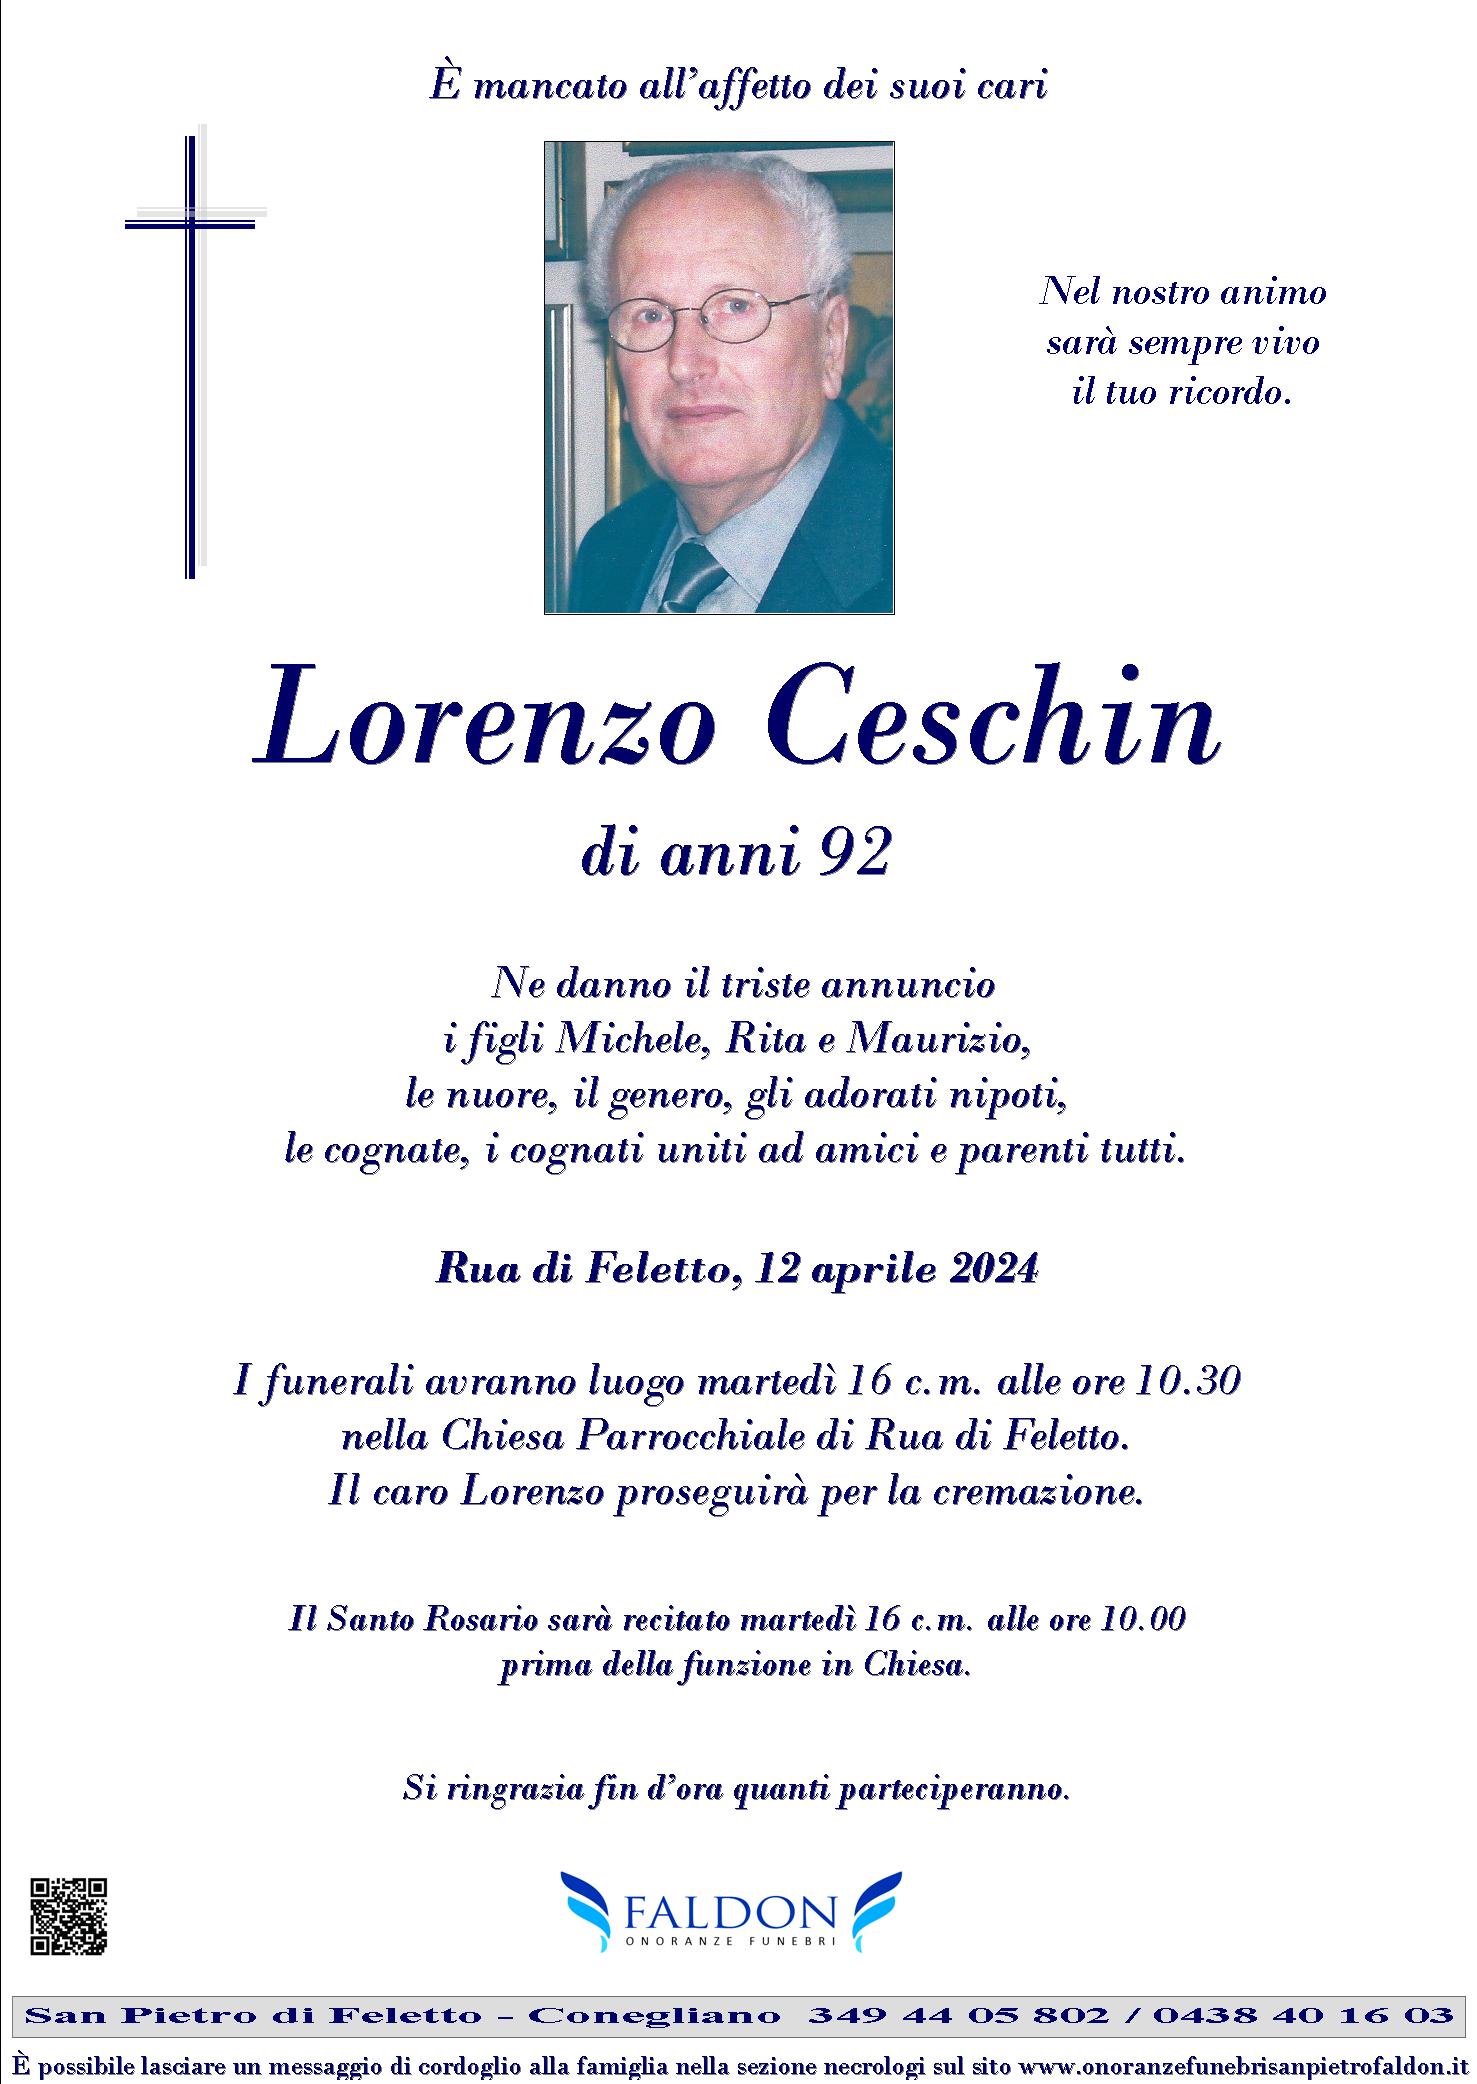 Lorenzo Ceschin